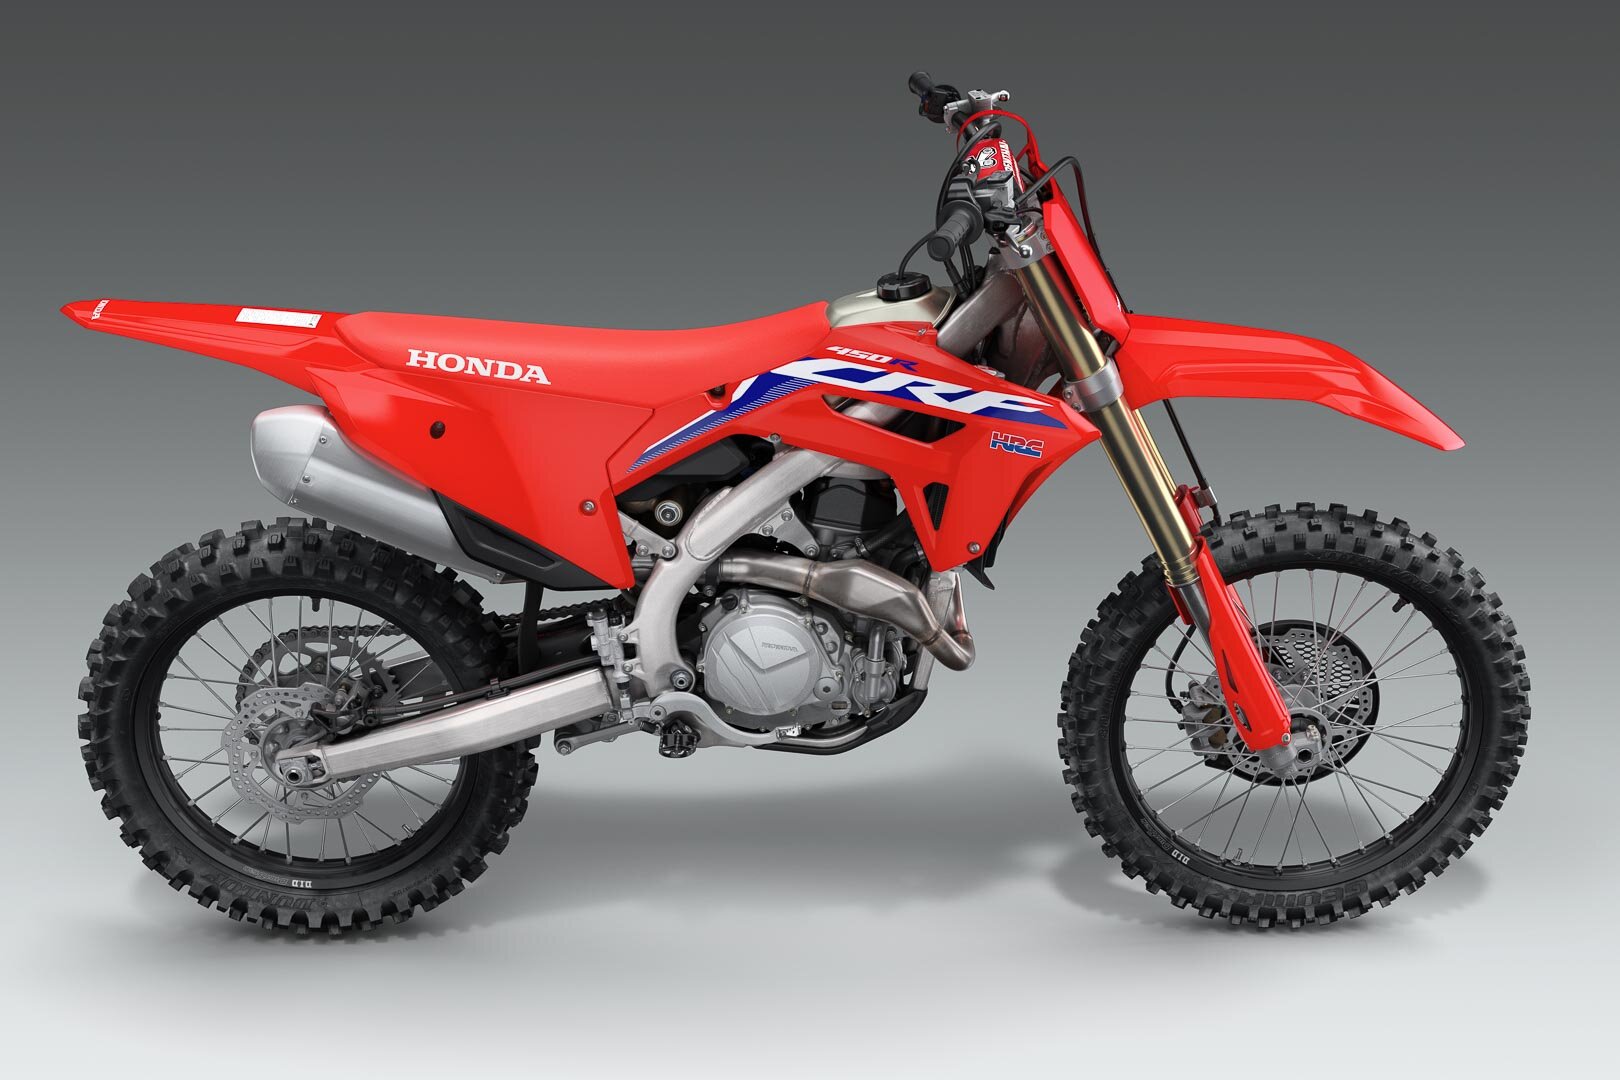 2021-Honda-CRF450R-First-Look-motocross-supercross-motorcycle-12.jpg